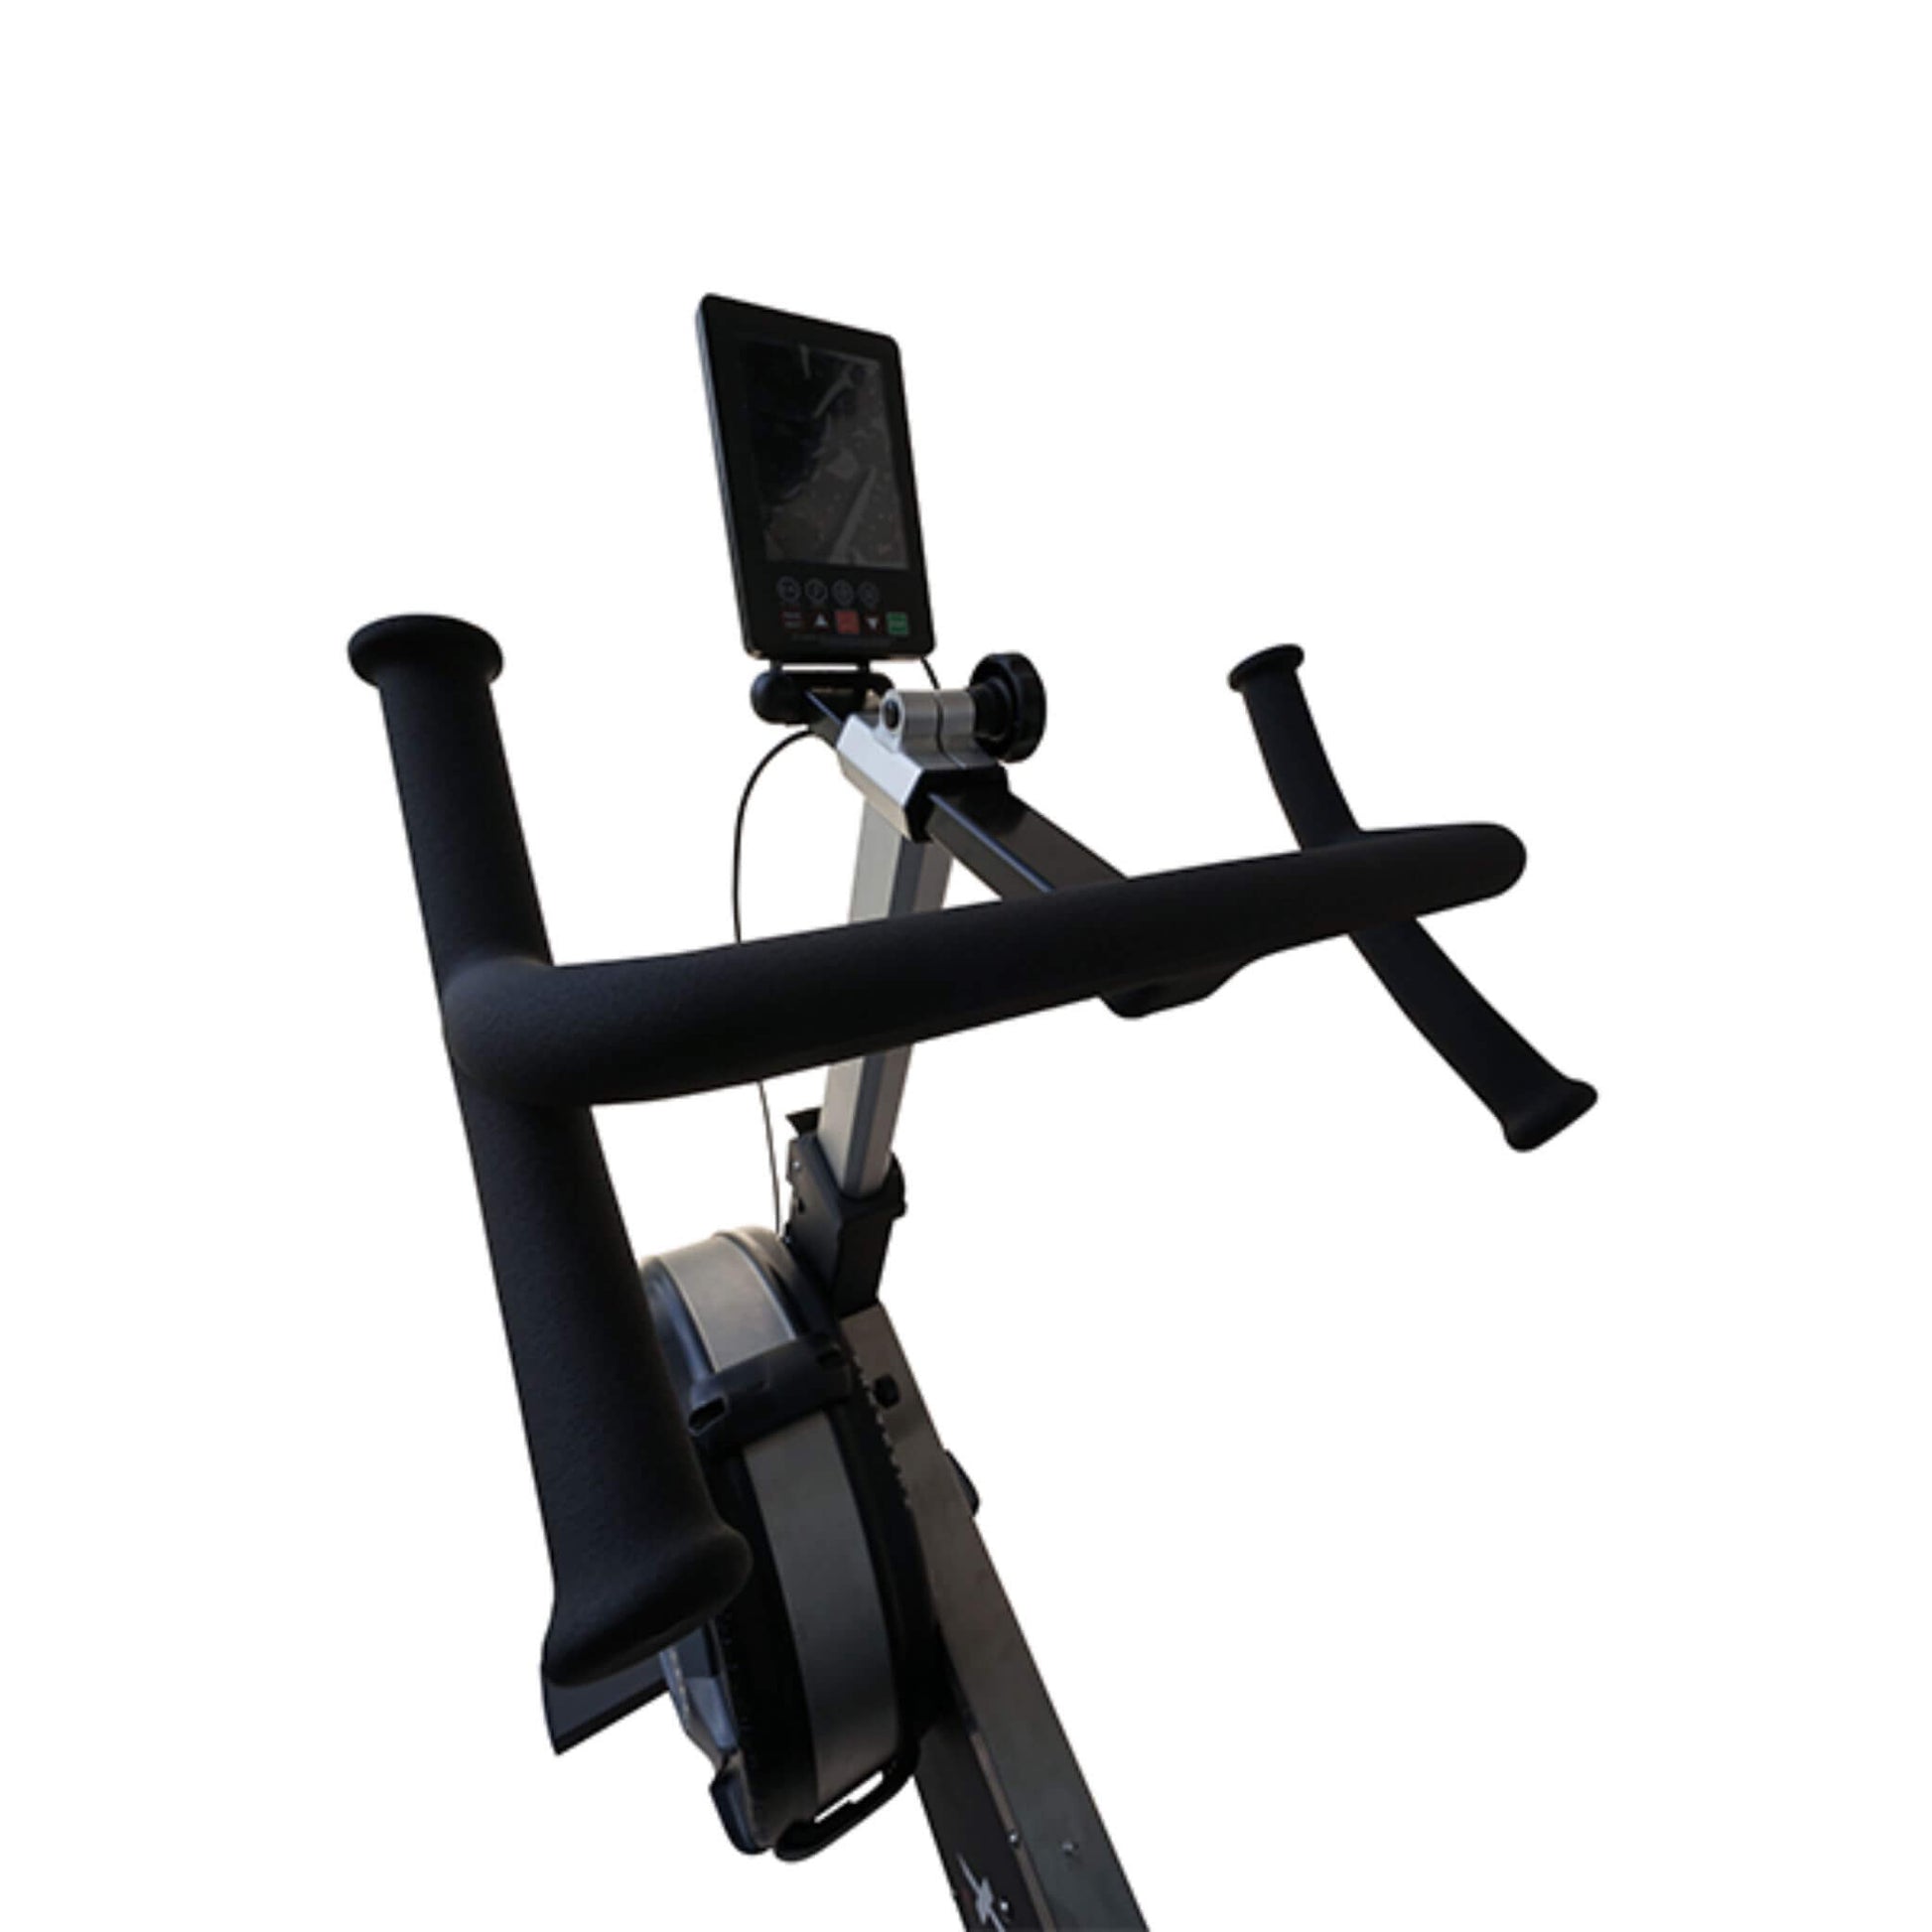 Gymgear pursuit 2.0 bike handlebars